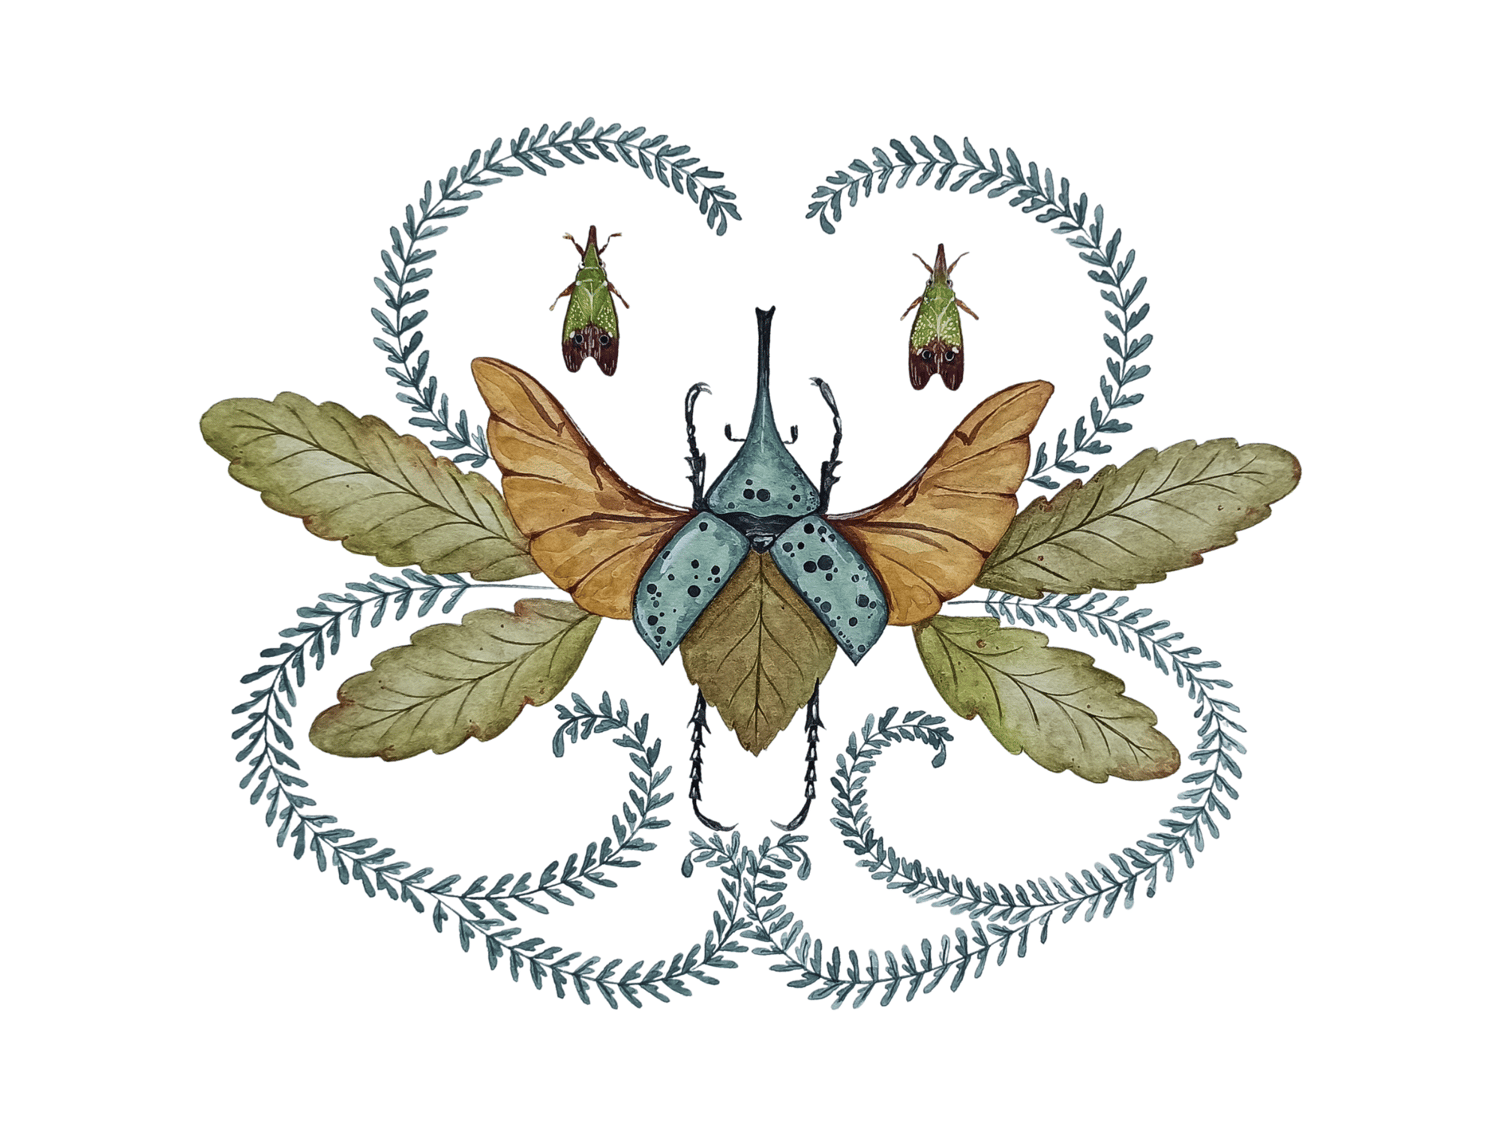 Image of Beetles & Ferns Watercolor Illustration PRINT 